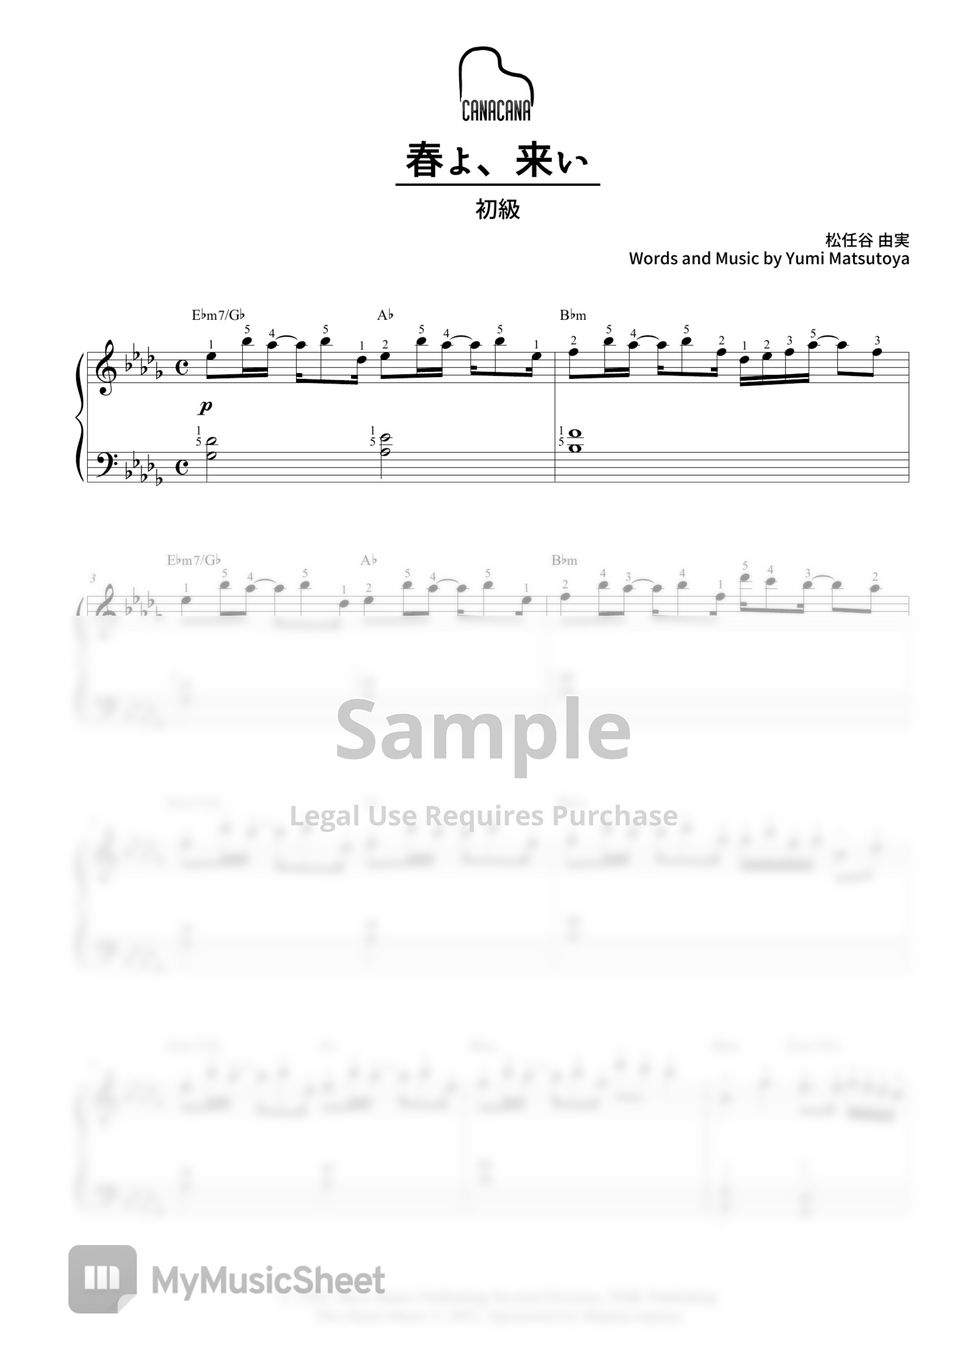 Yumi Matsutoya - Haruyo Koi (Beginner level / with finger numbers and chords) by CANACANA family